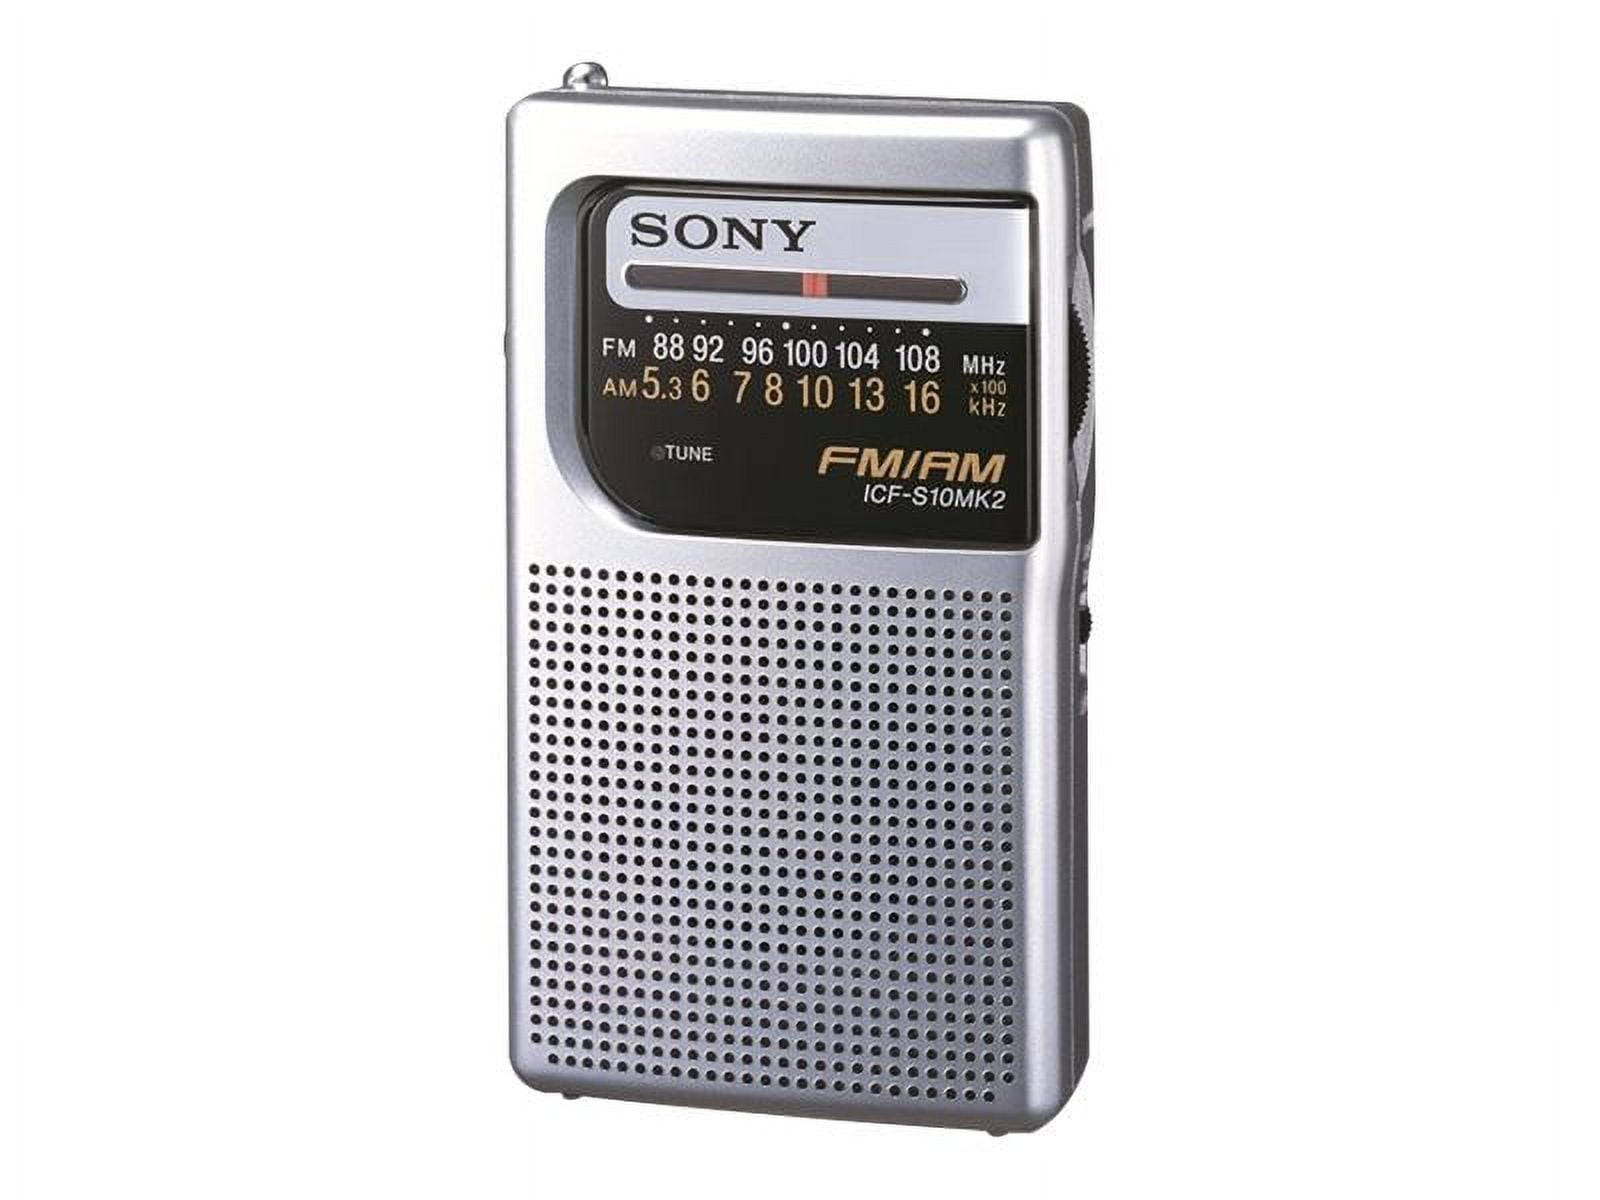 Sony Radio portátil